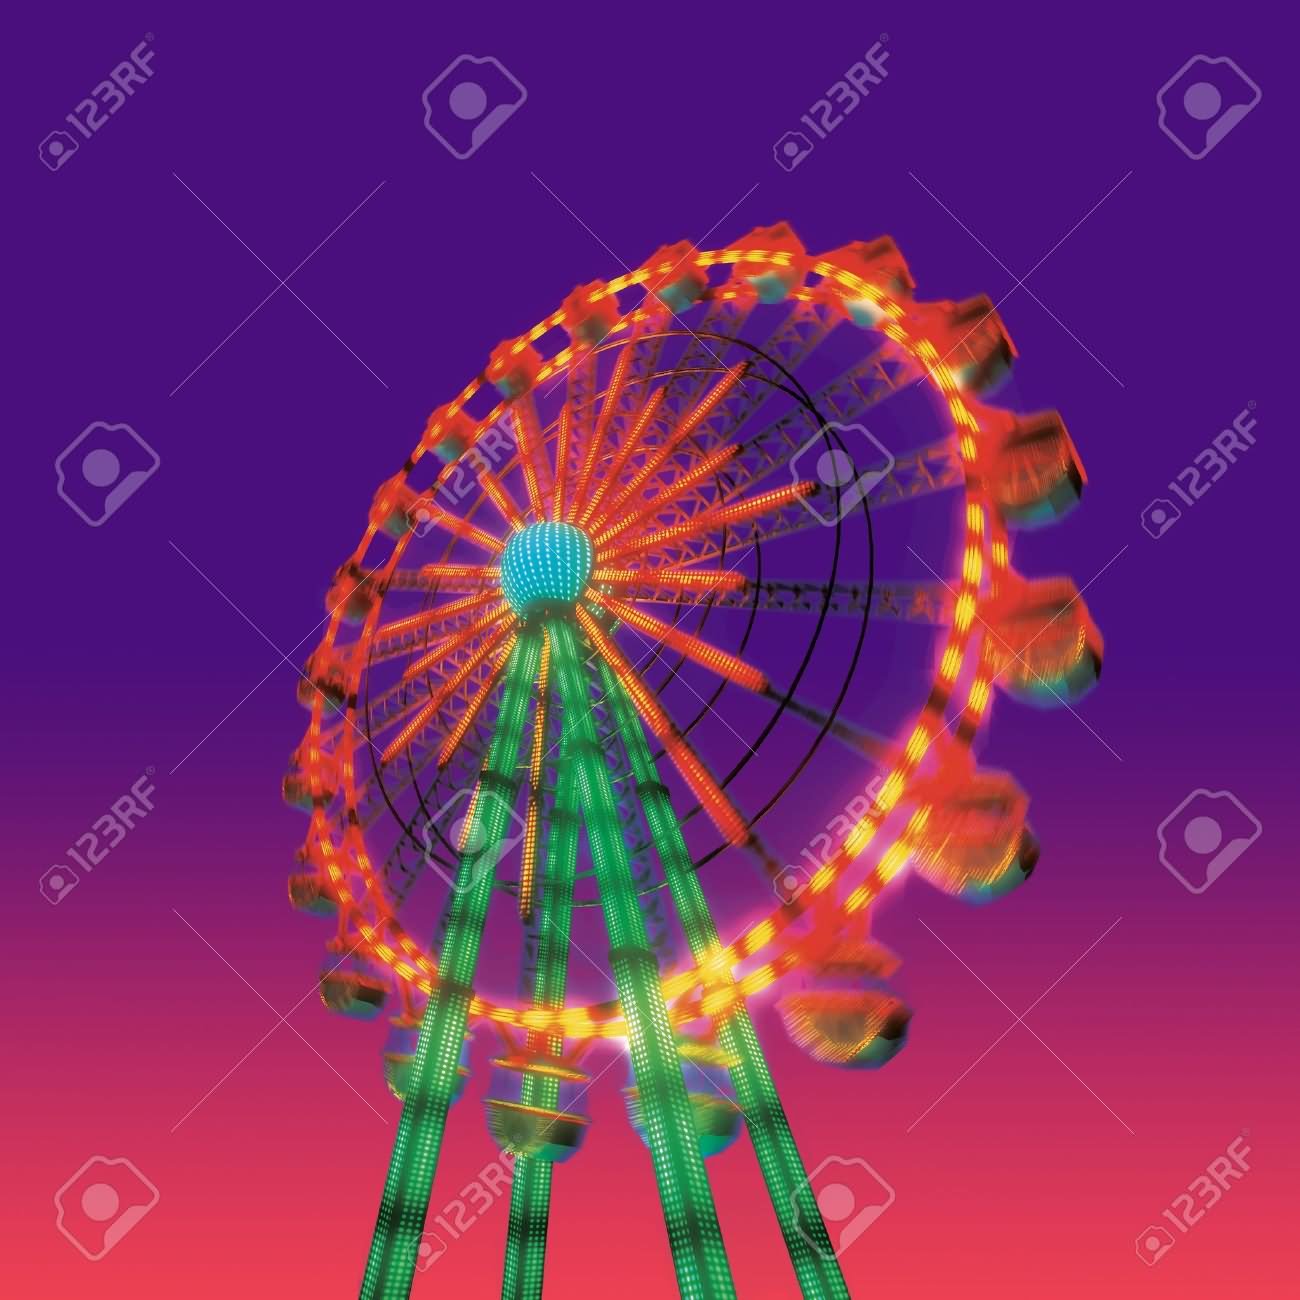 Wiener Riesenrad Ferris Wheel Isolated On Night